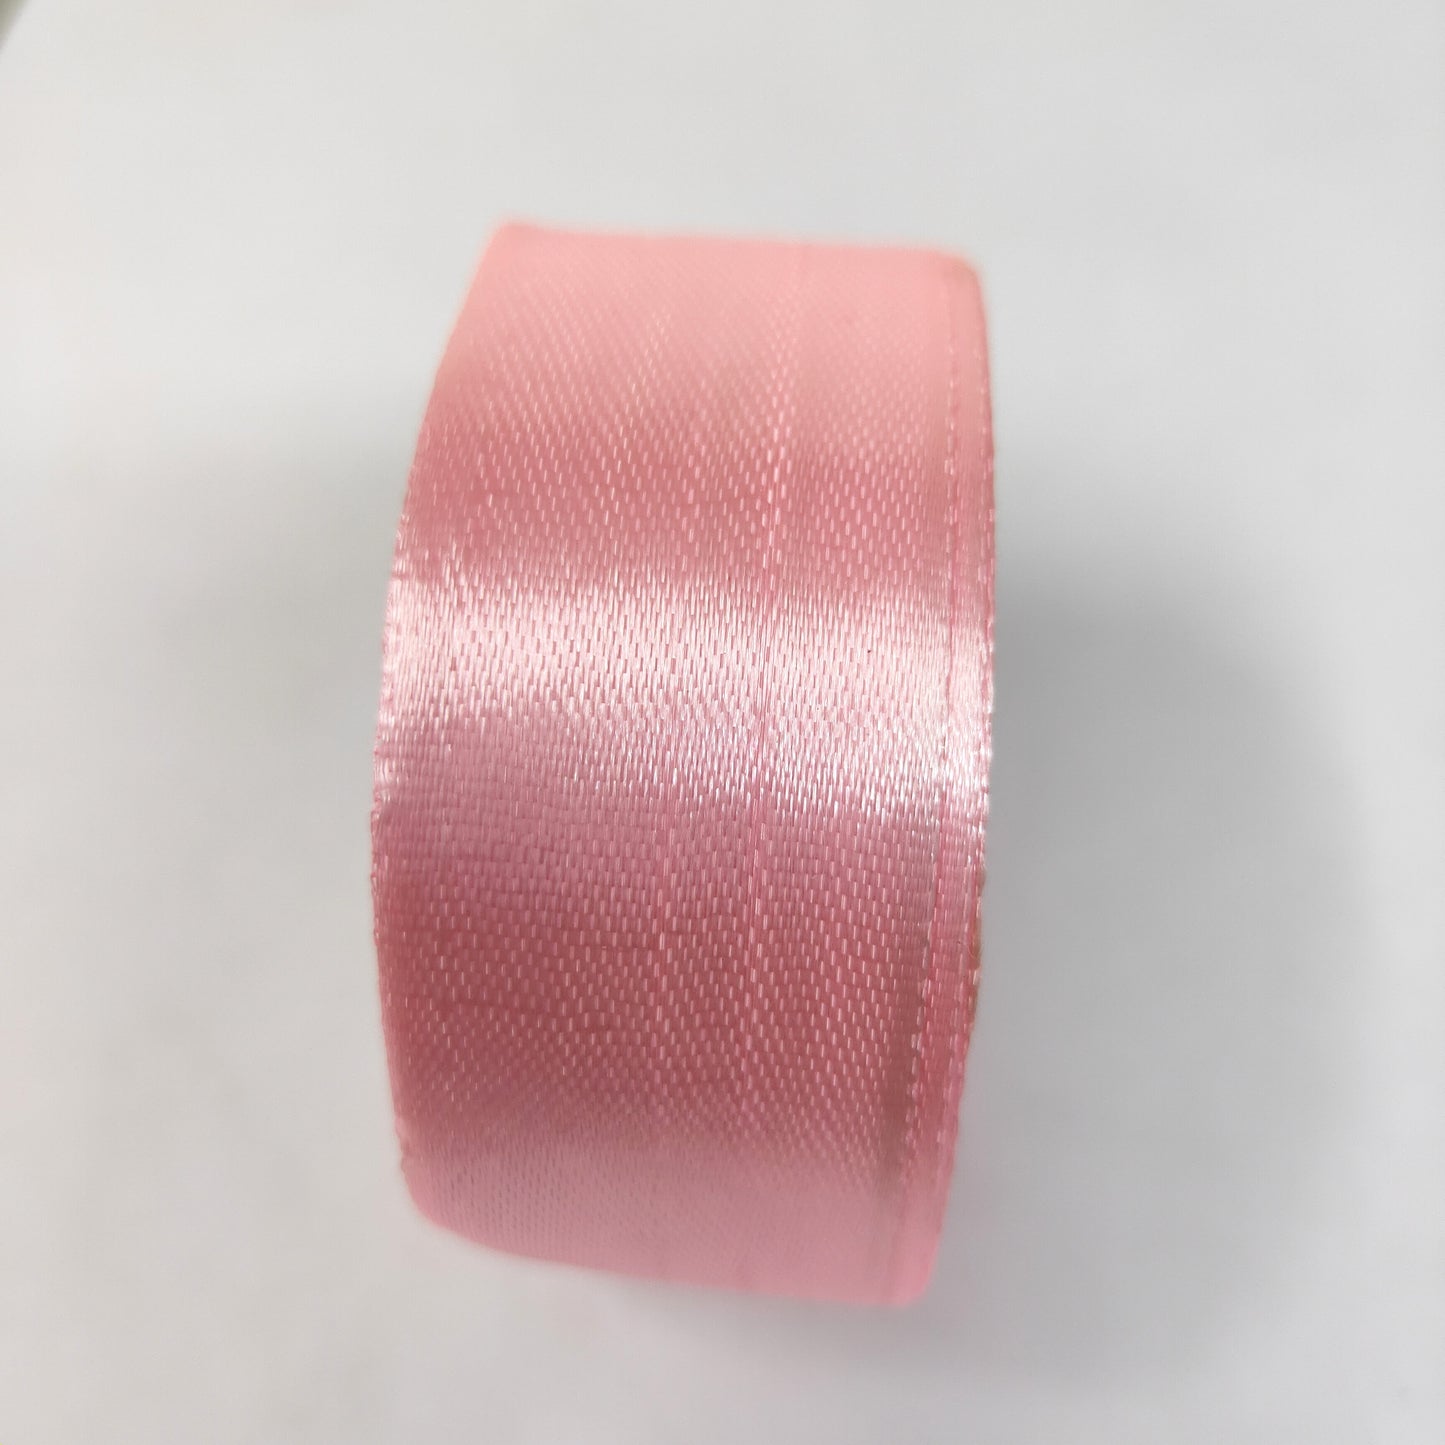 25mm (1 inch) Pink Satin Ribbon (005)